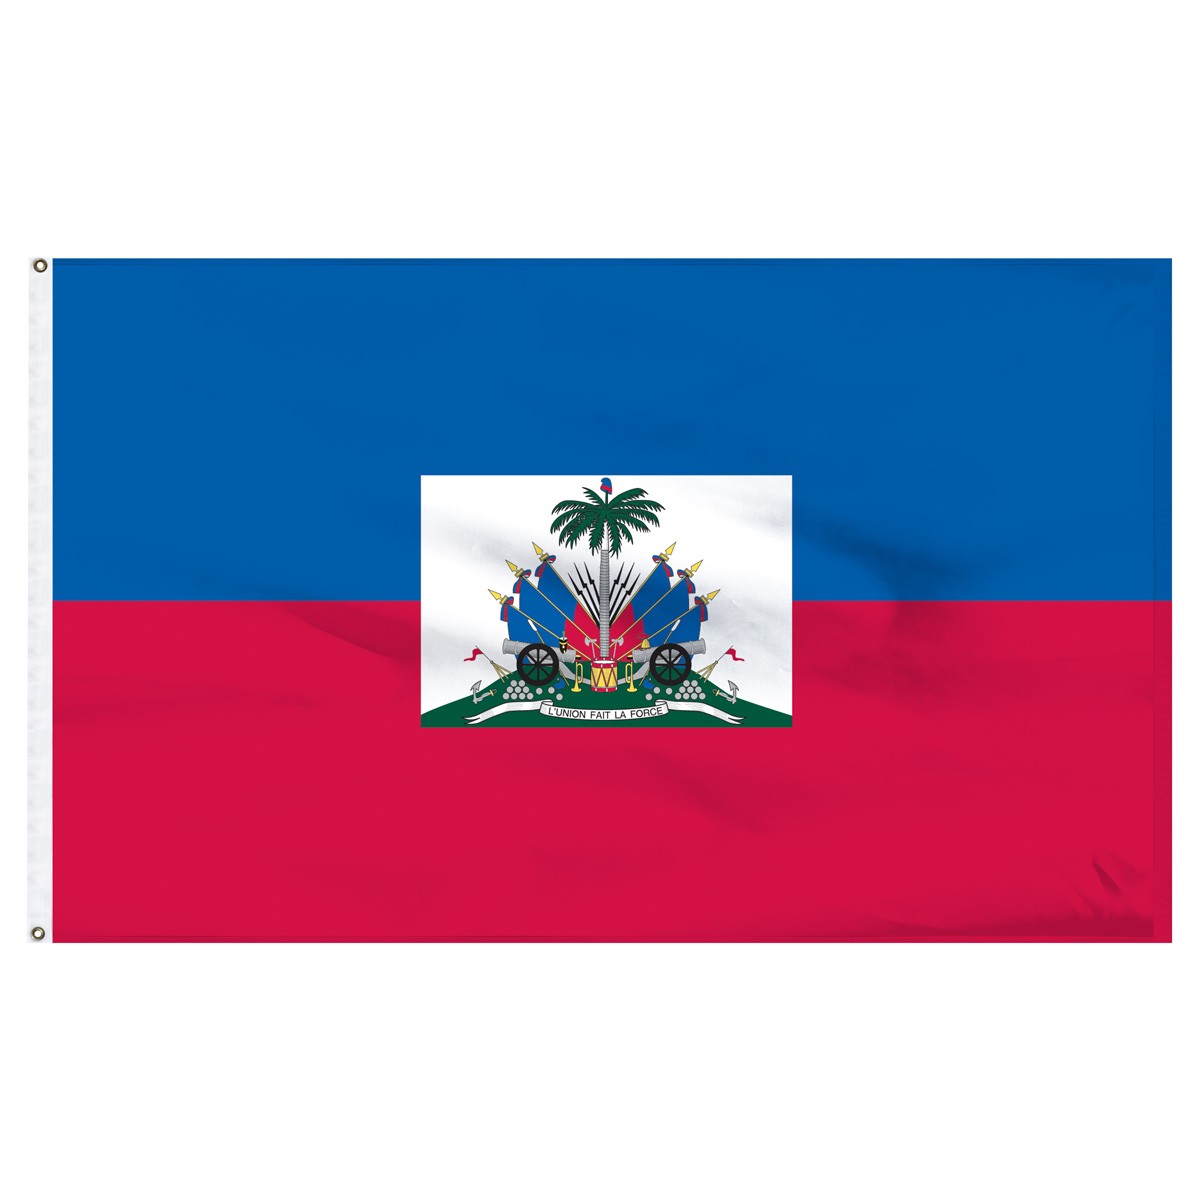 Haiti Building Pennants and Flags